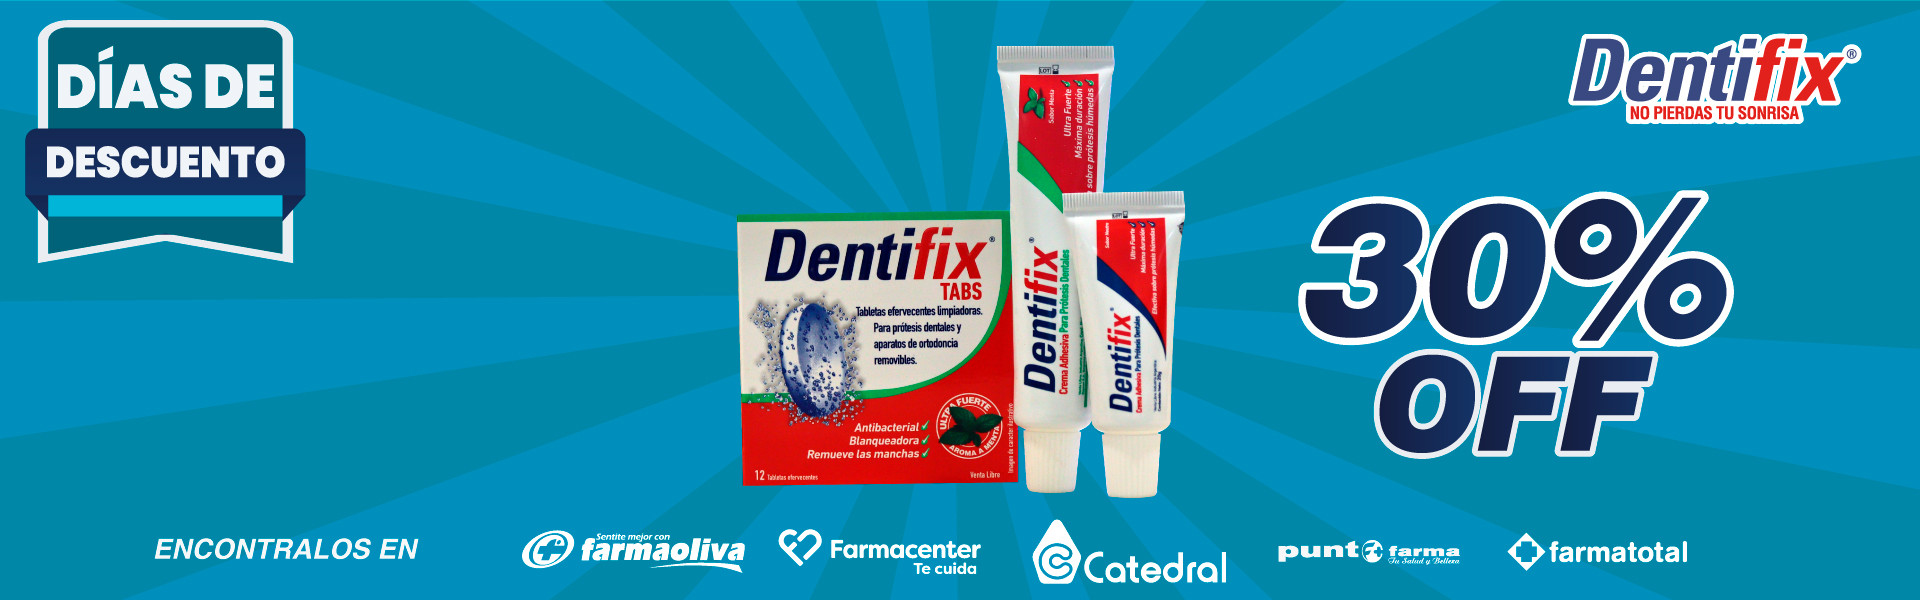 promo-dentifix-1668453288.jpg